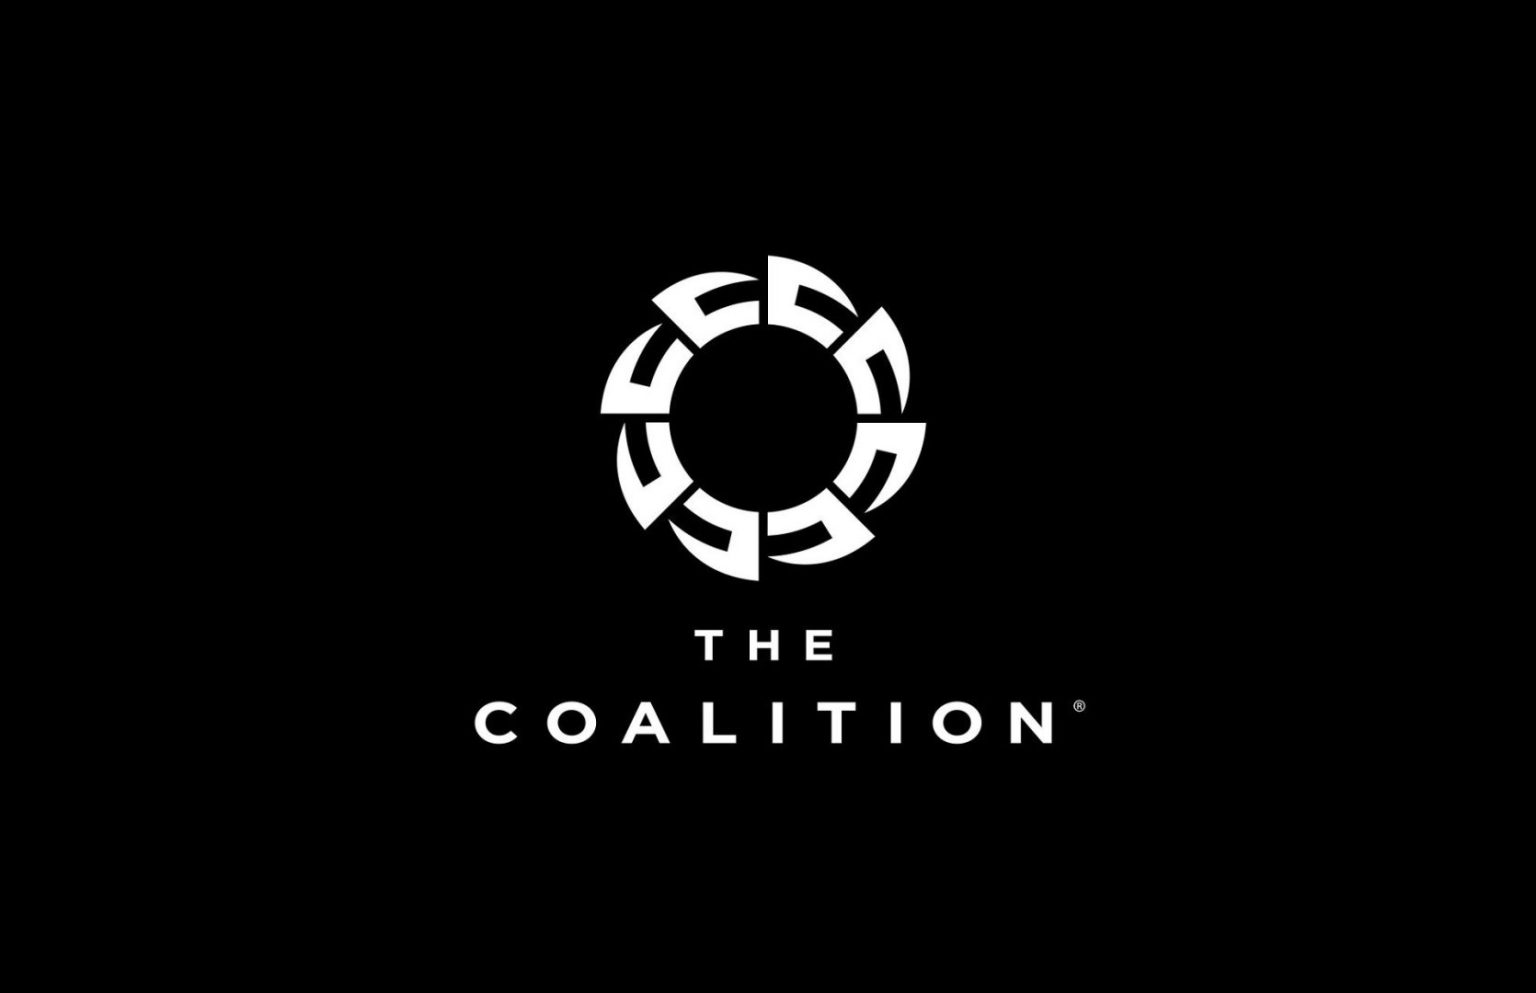 The Coalition studio